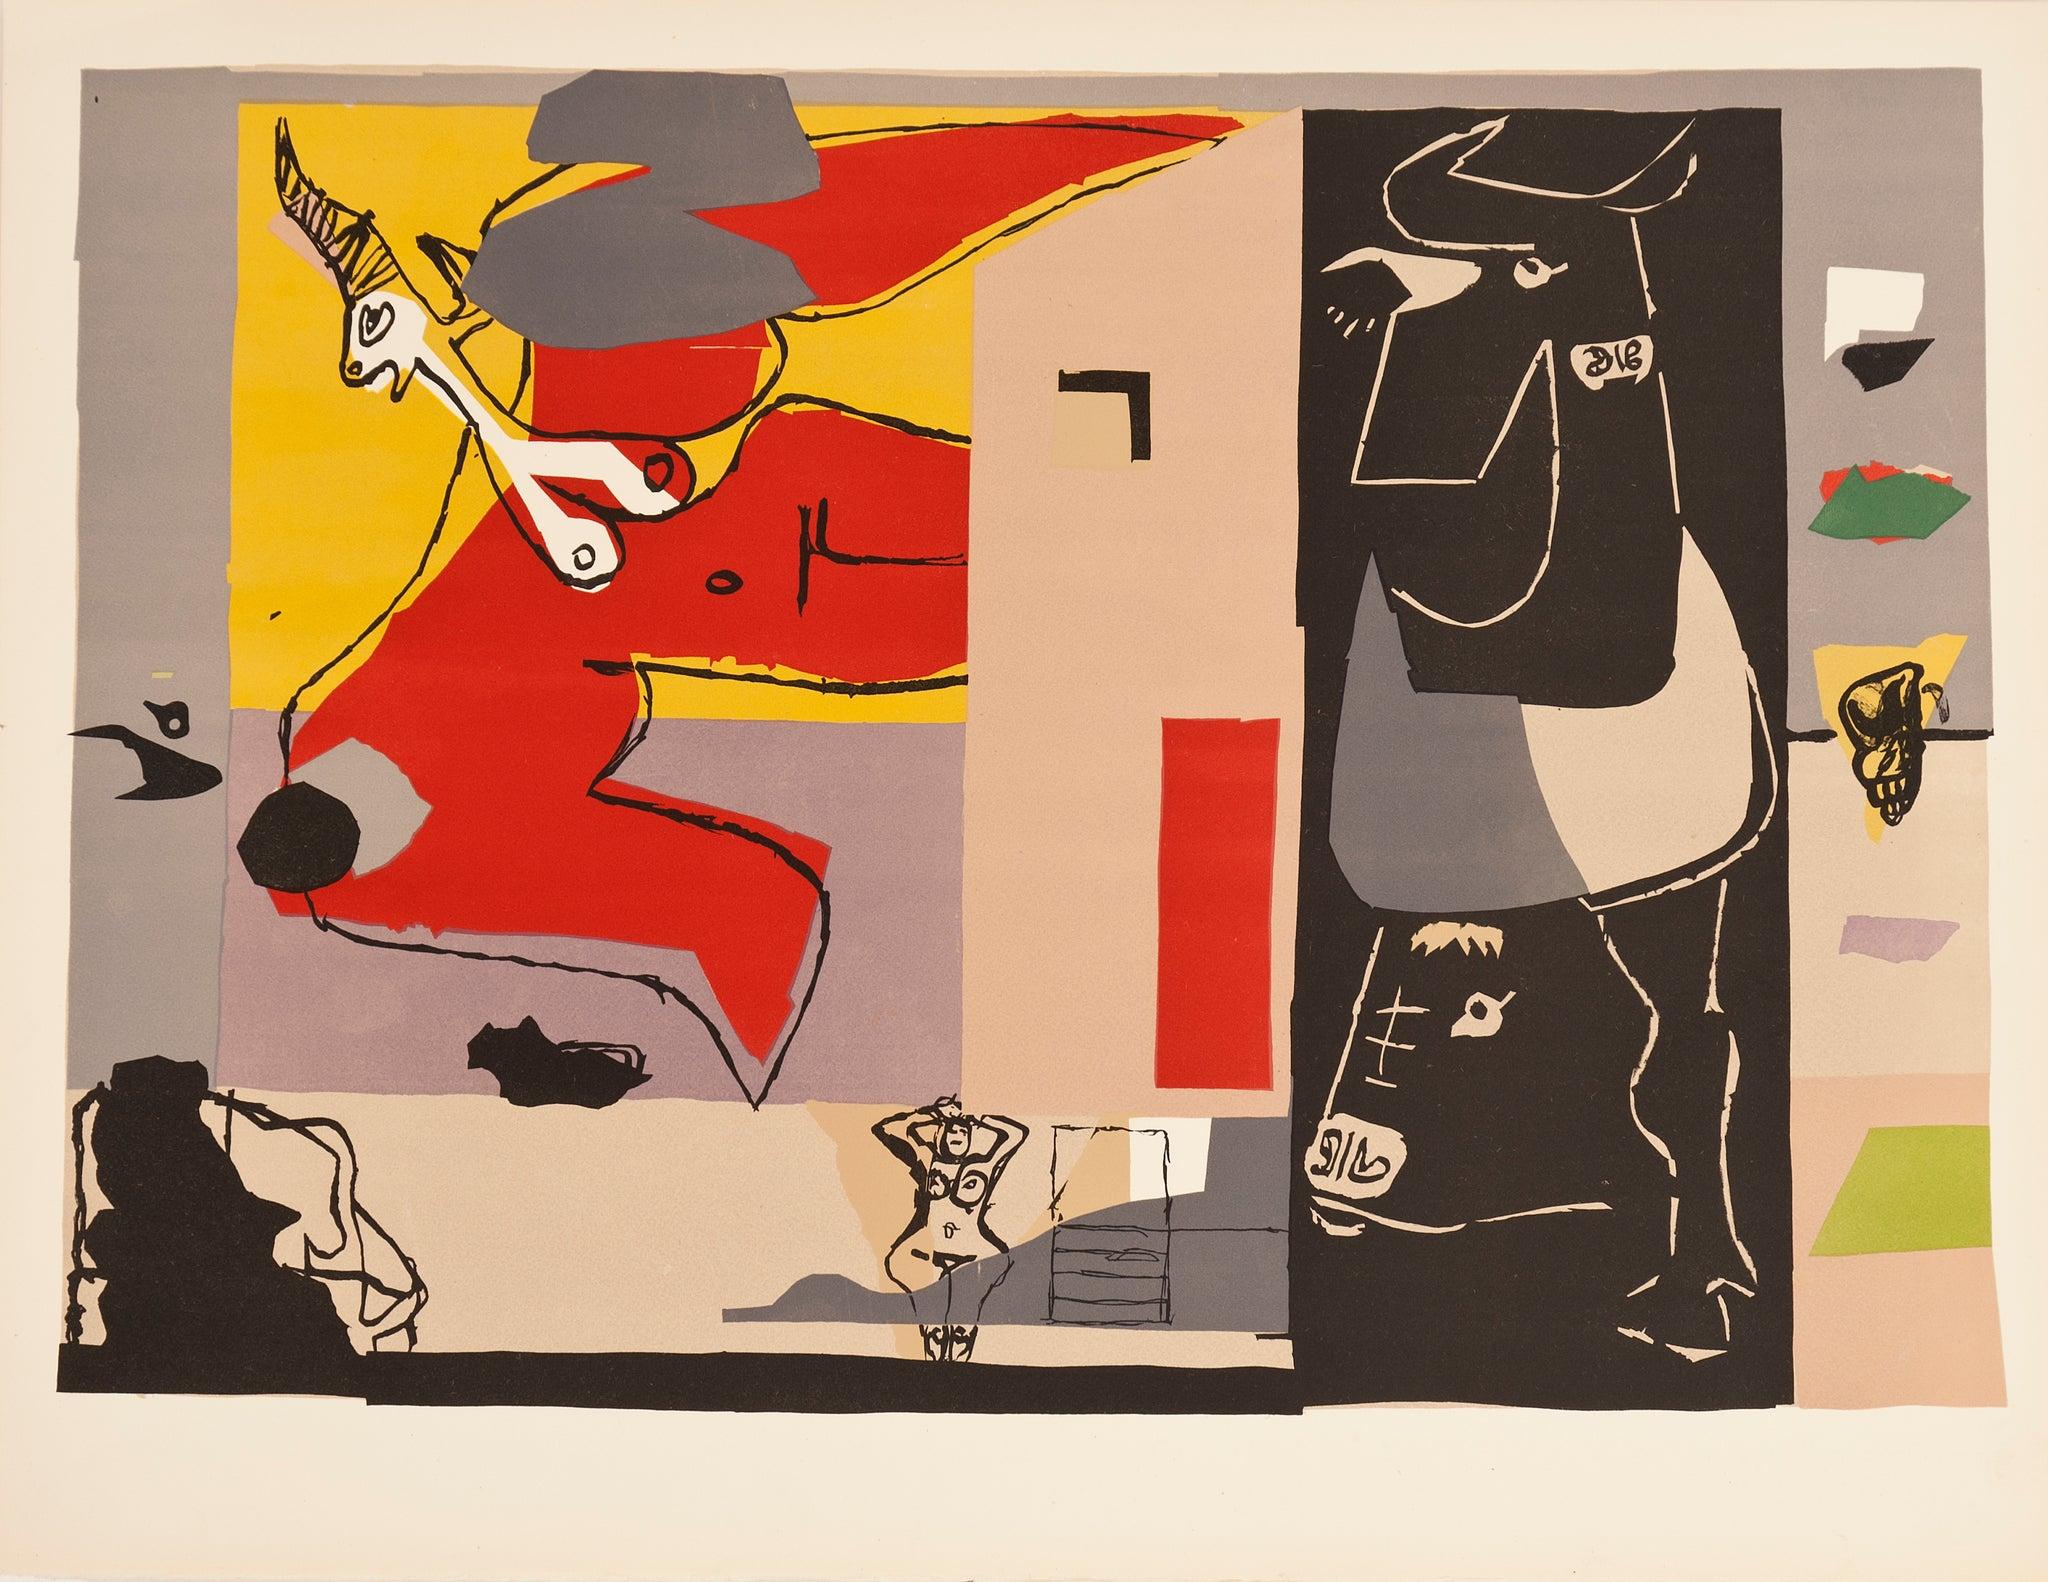 Künstler: Le Corbusier

Medium: Lithographie, 1960

Abmessungen: 17,25 x 22,5 Zoll, 43,8 x 57,2 cm

Arches Papier - Perfekter Zustand A+

Gedruckt im Atelier Mourlot, Paris